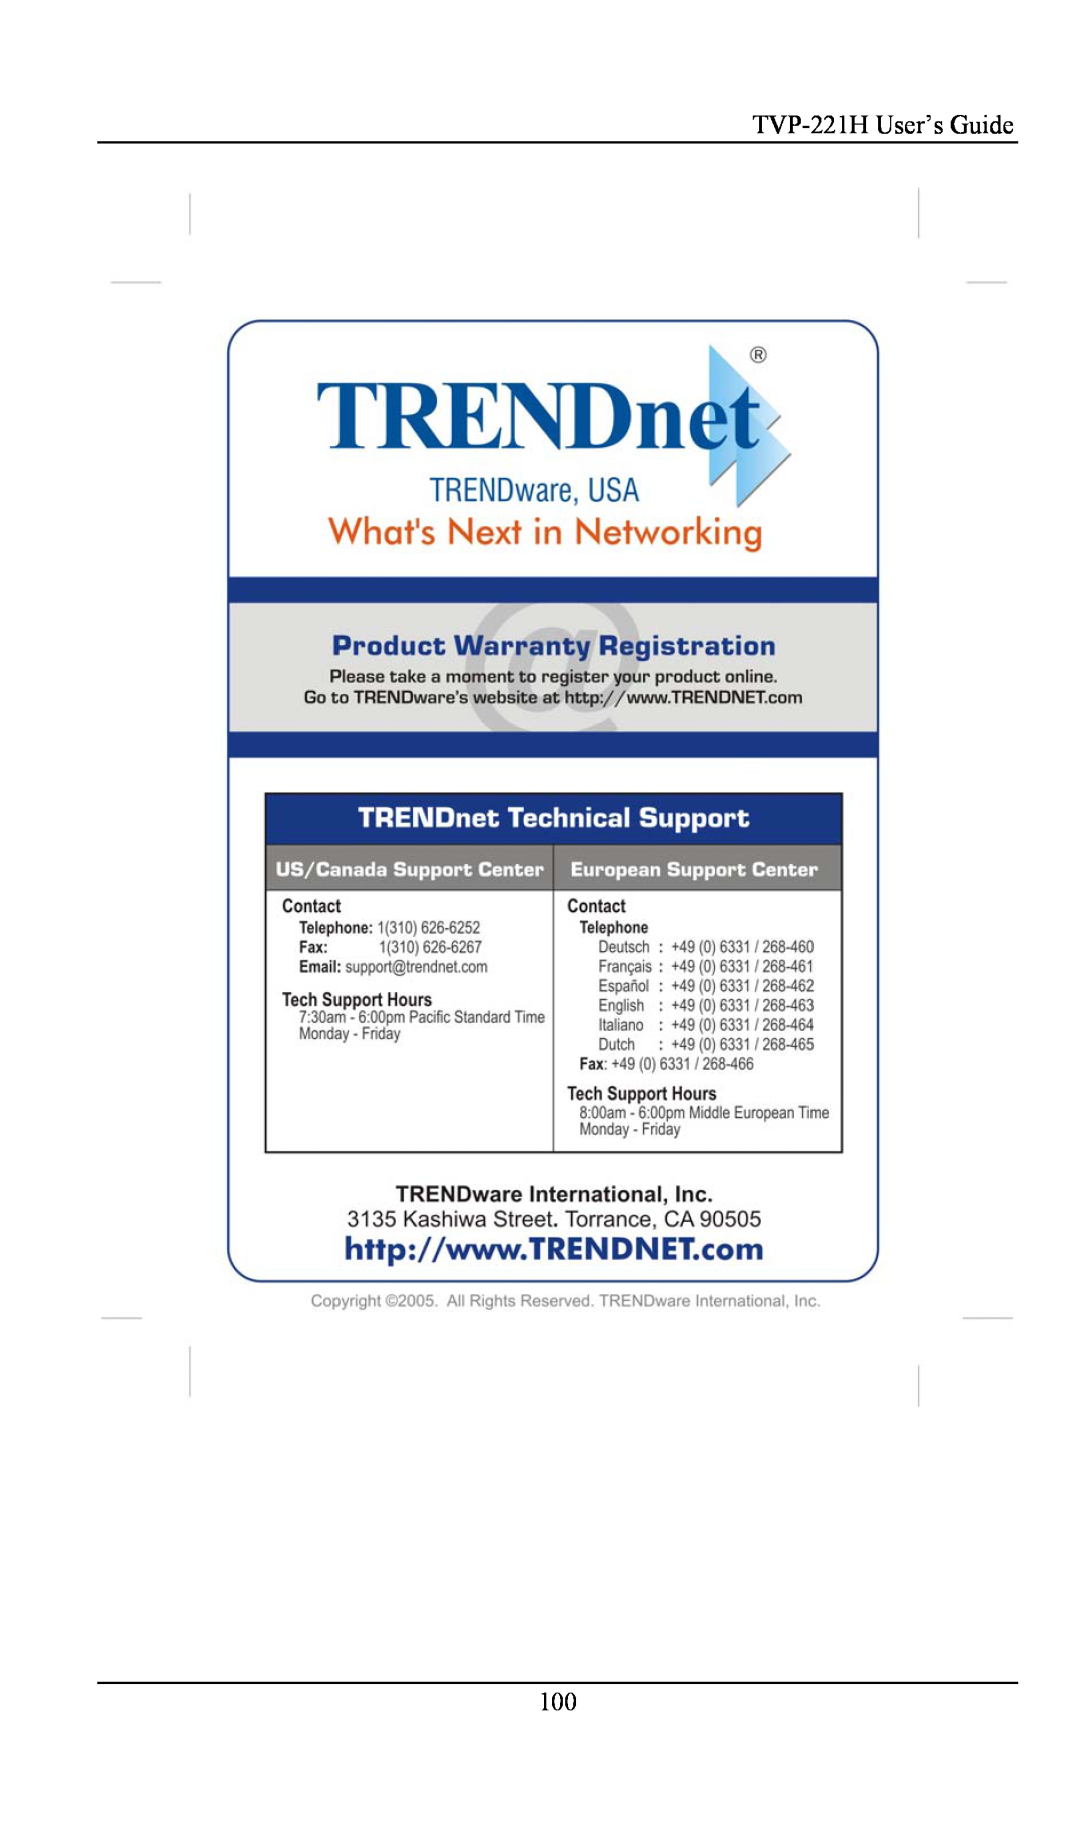 TRENDnet TVP- 221H, VoIP Gateway manual TVP-221H User’s Guide 